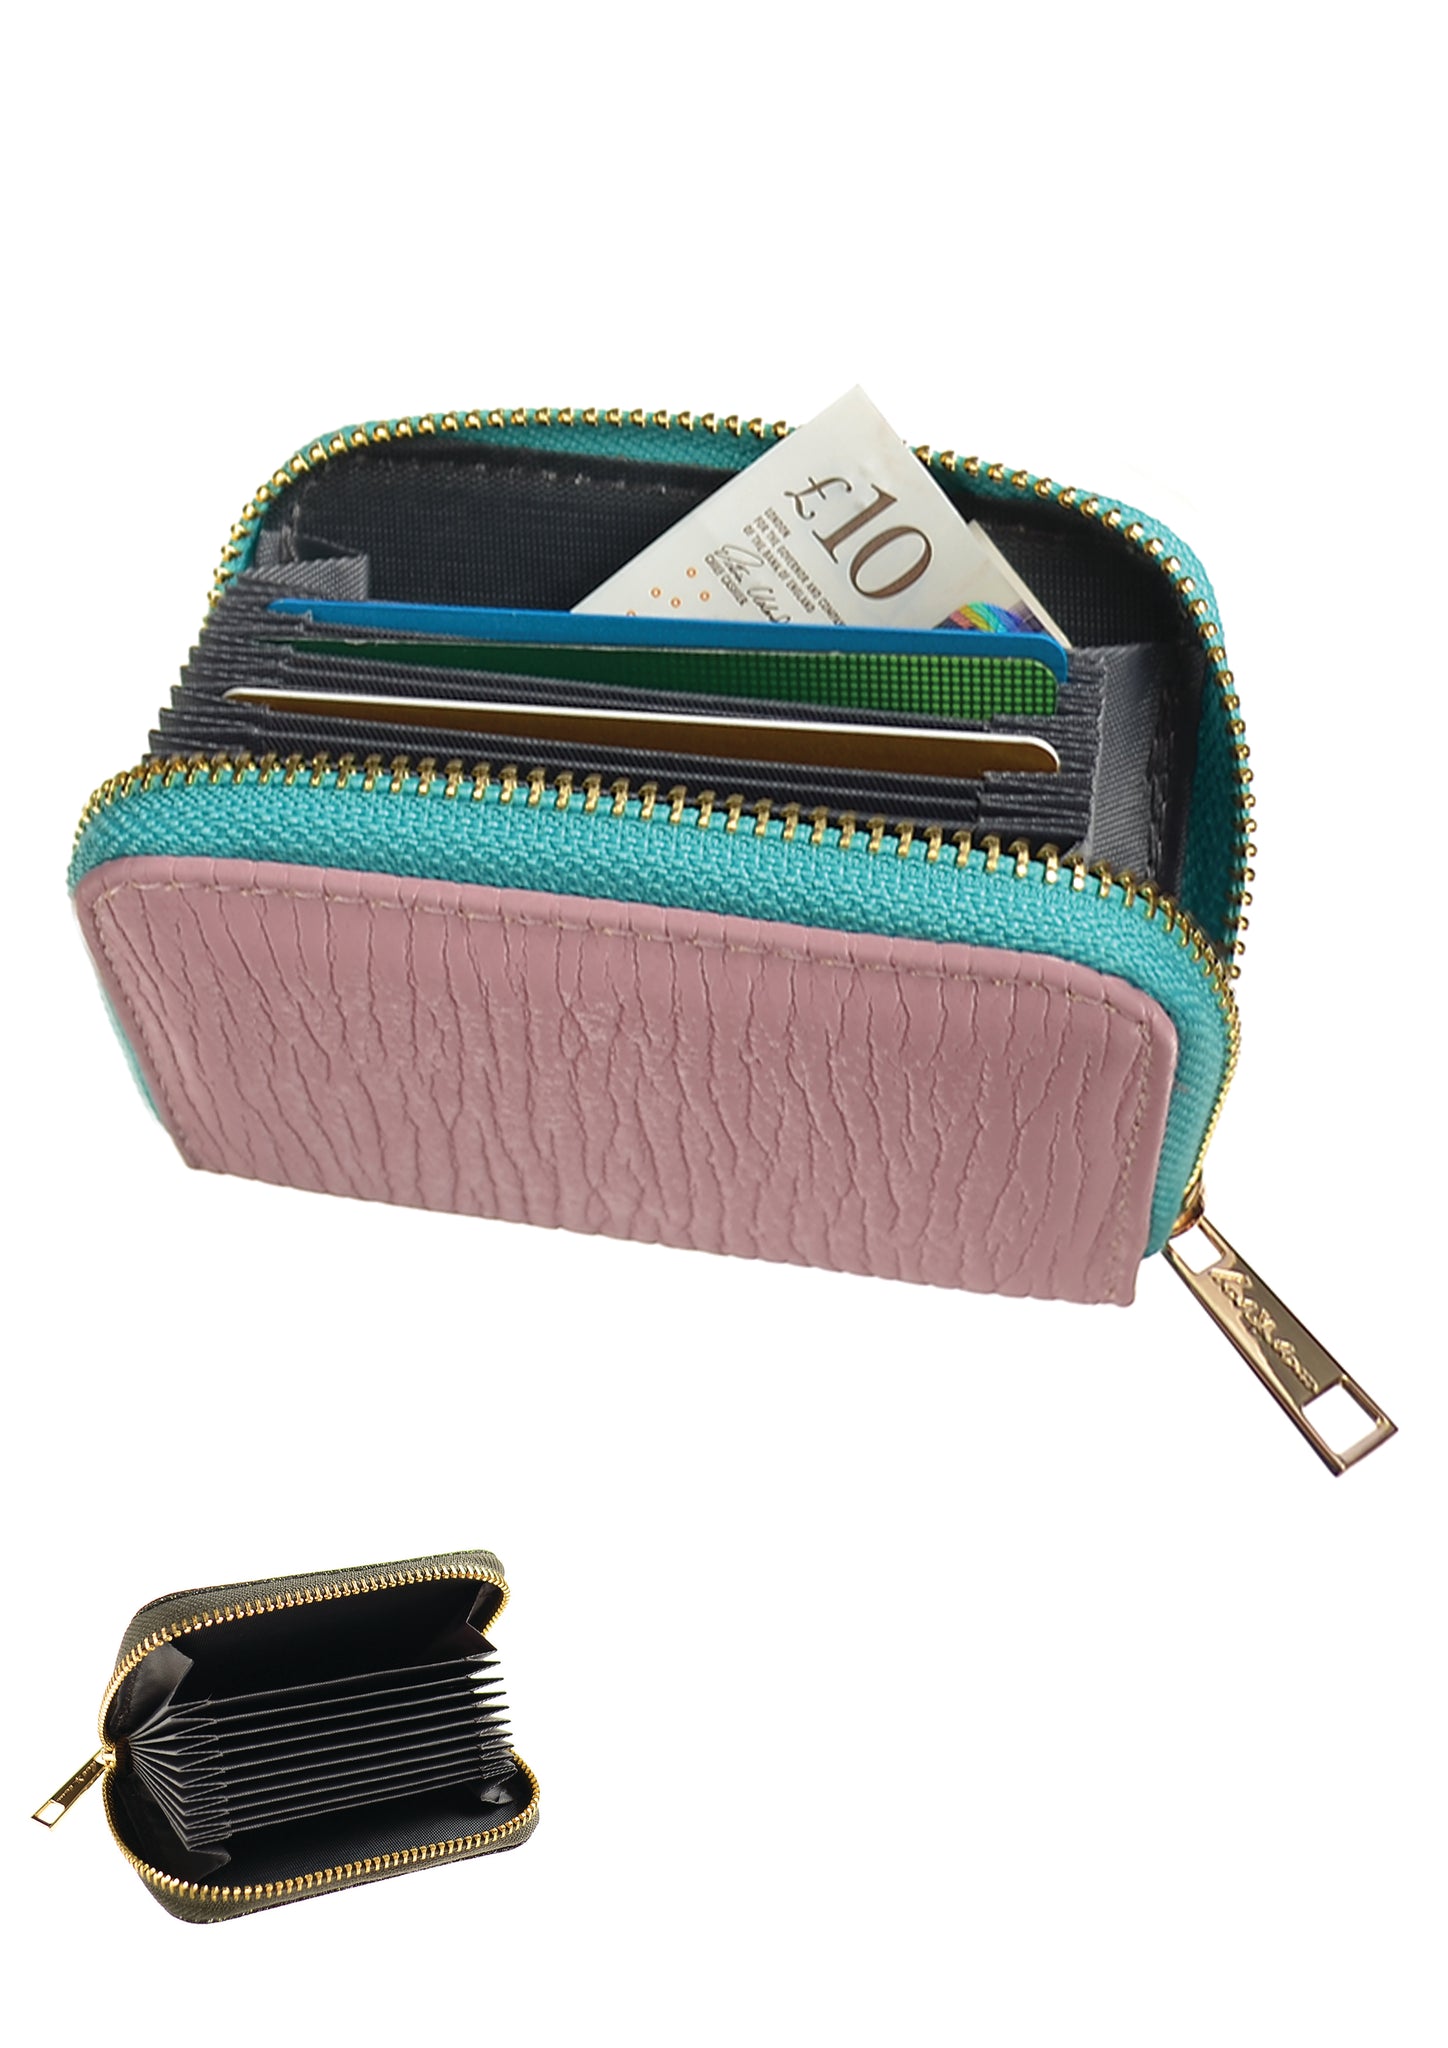 Credit card organiser/purse